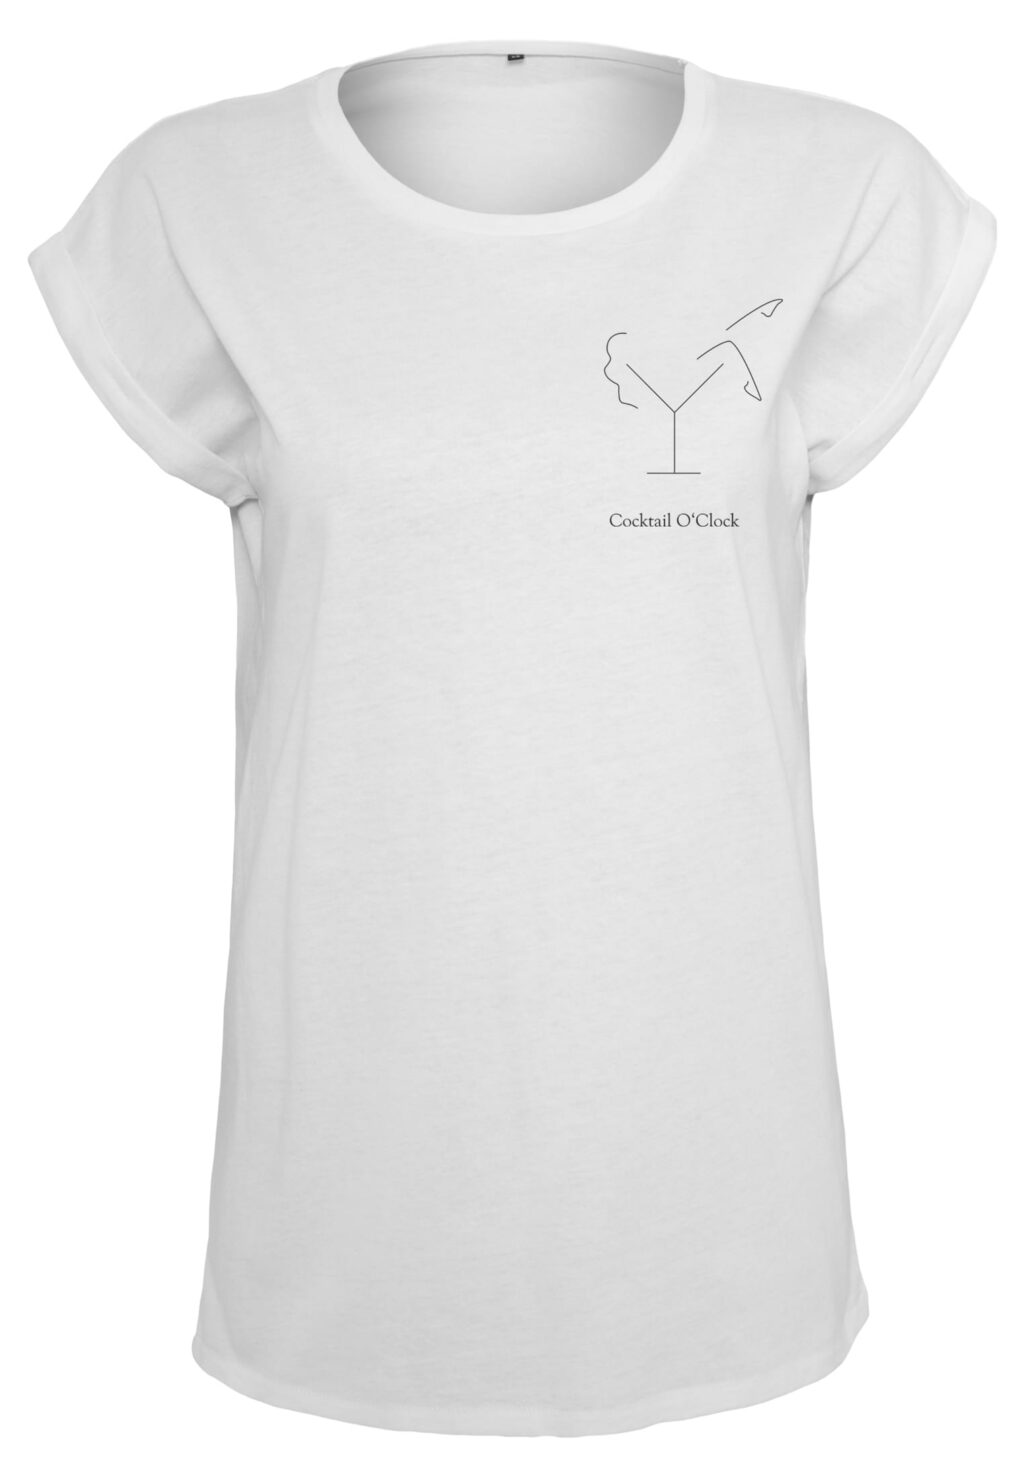 Ladies Cocktail O'Clock Tee T-Shirt Round Neck white MT2396